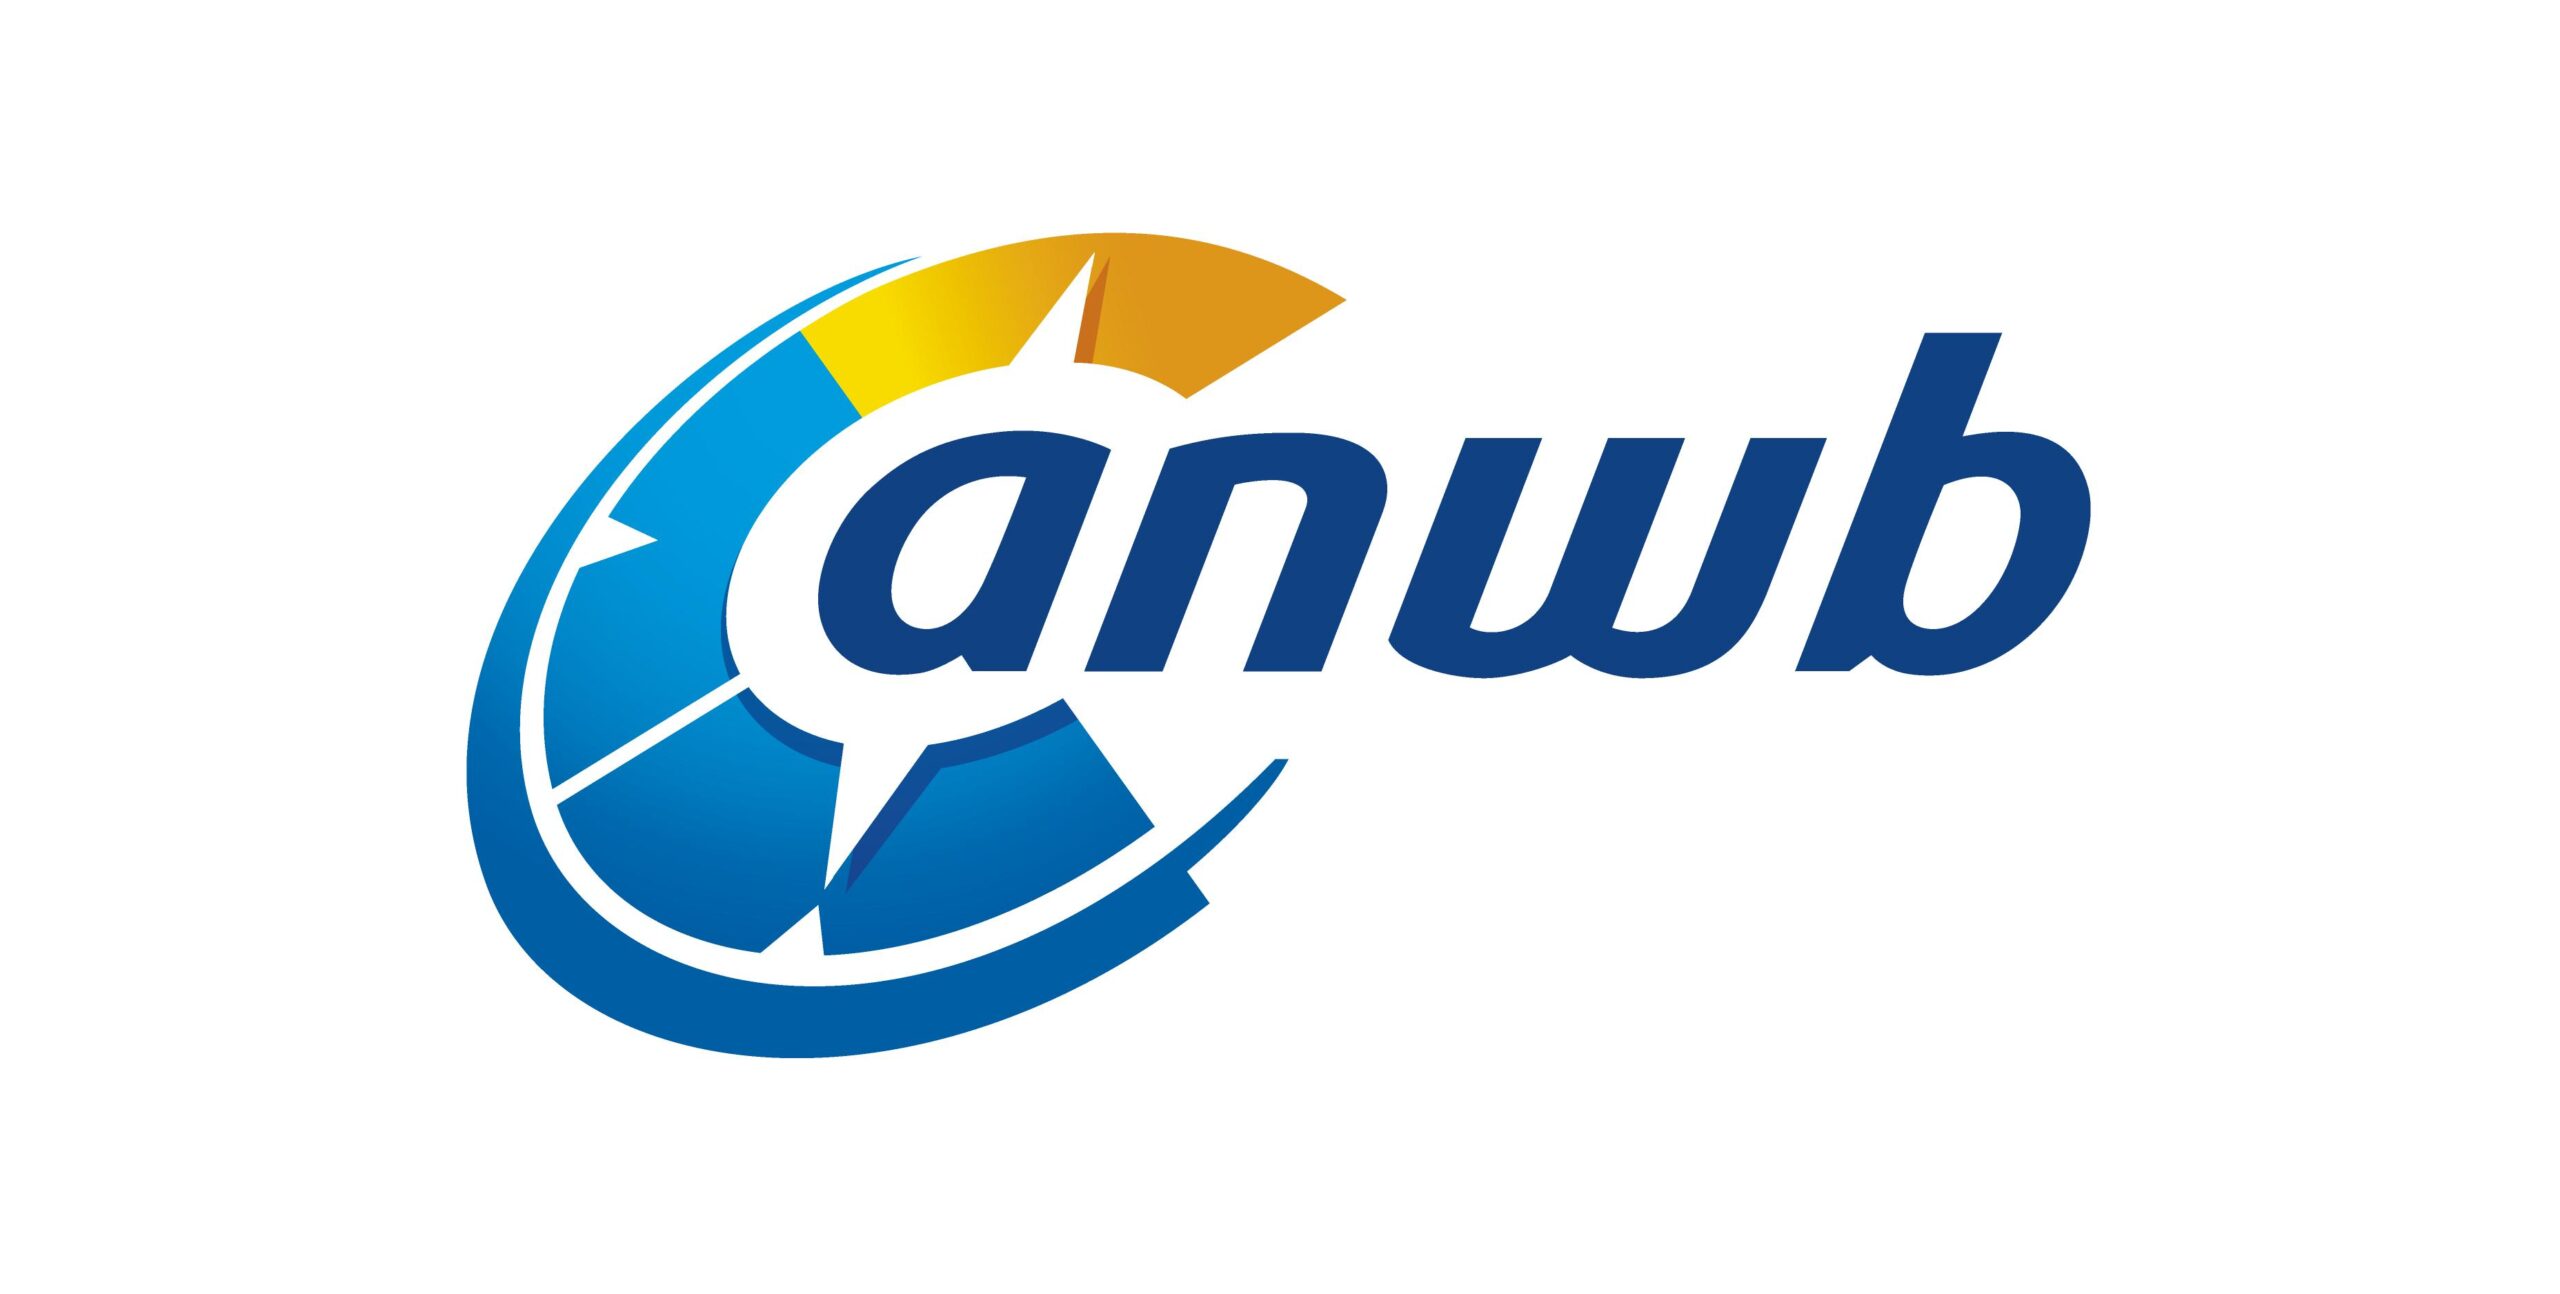 ANWB Logo